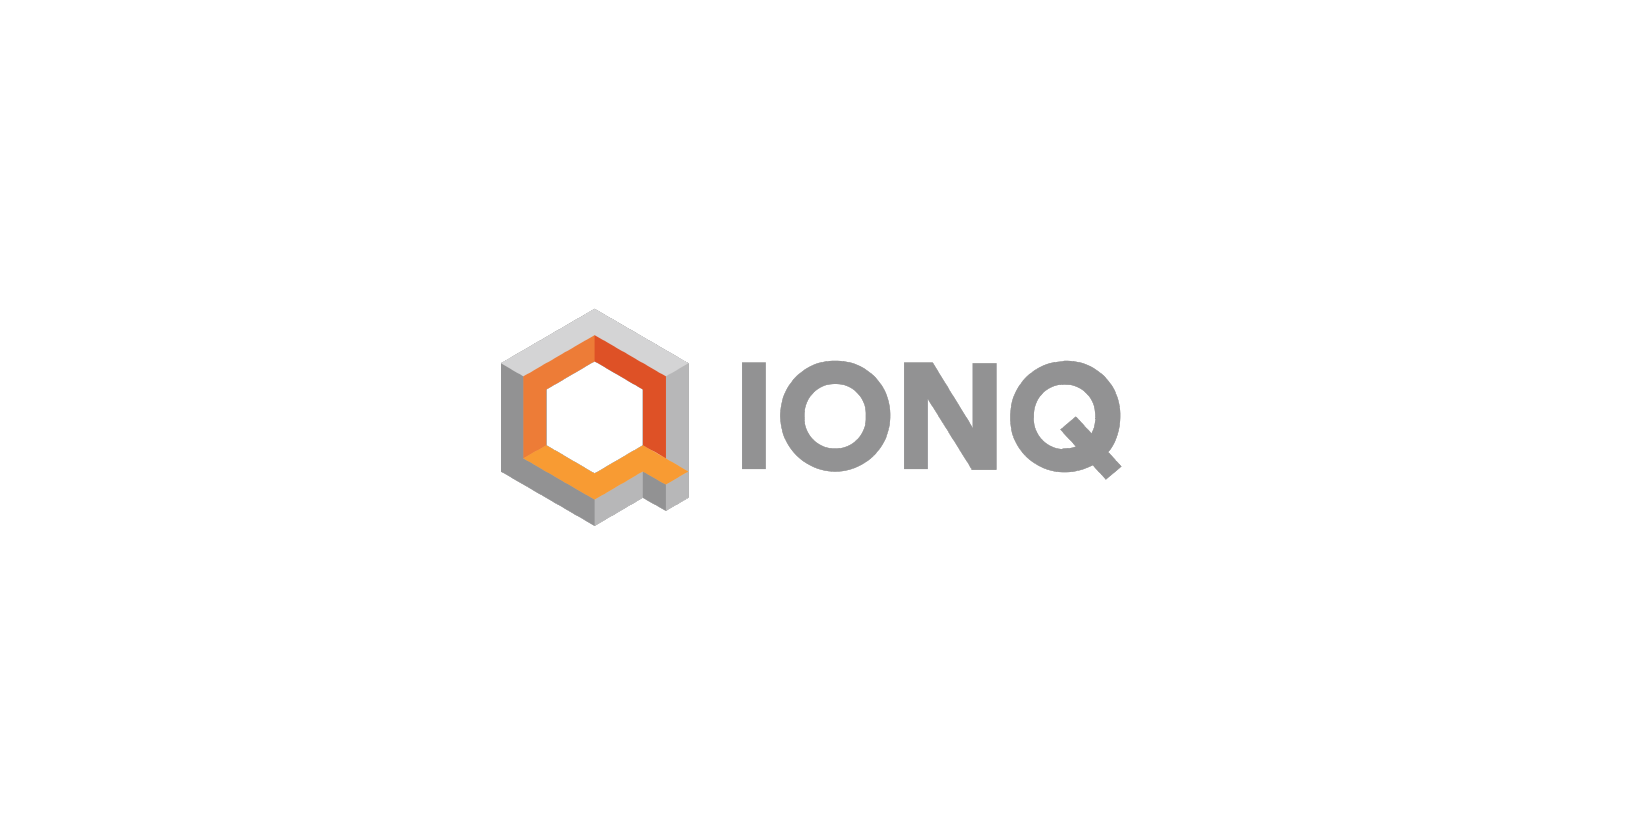 VisionFund Portfolio Company IonQ's Logo